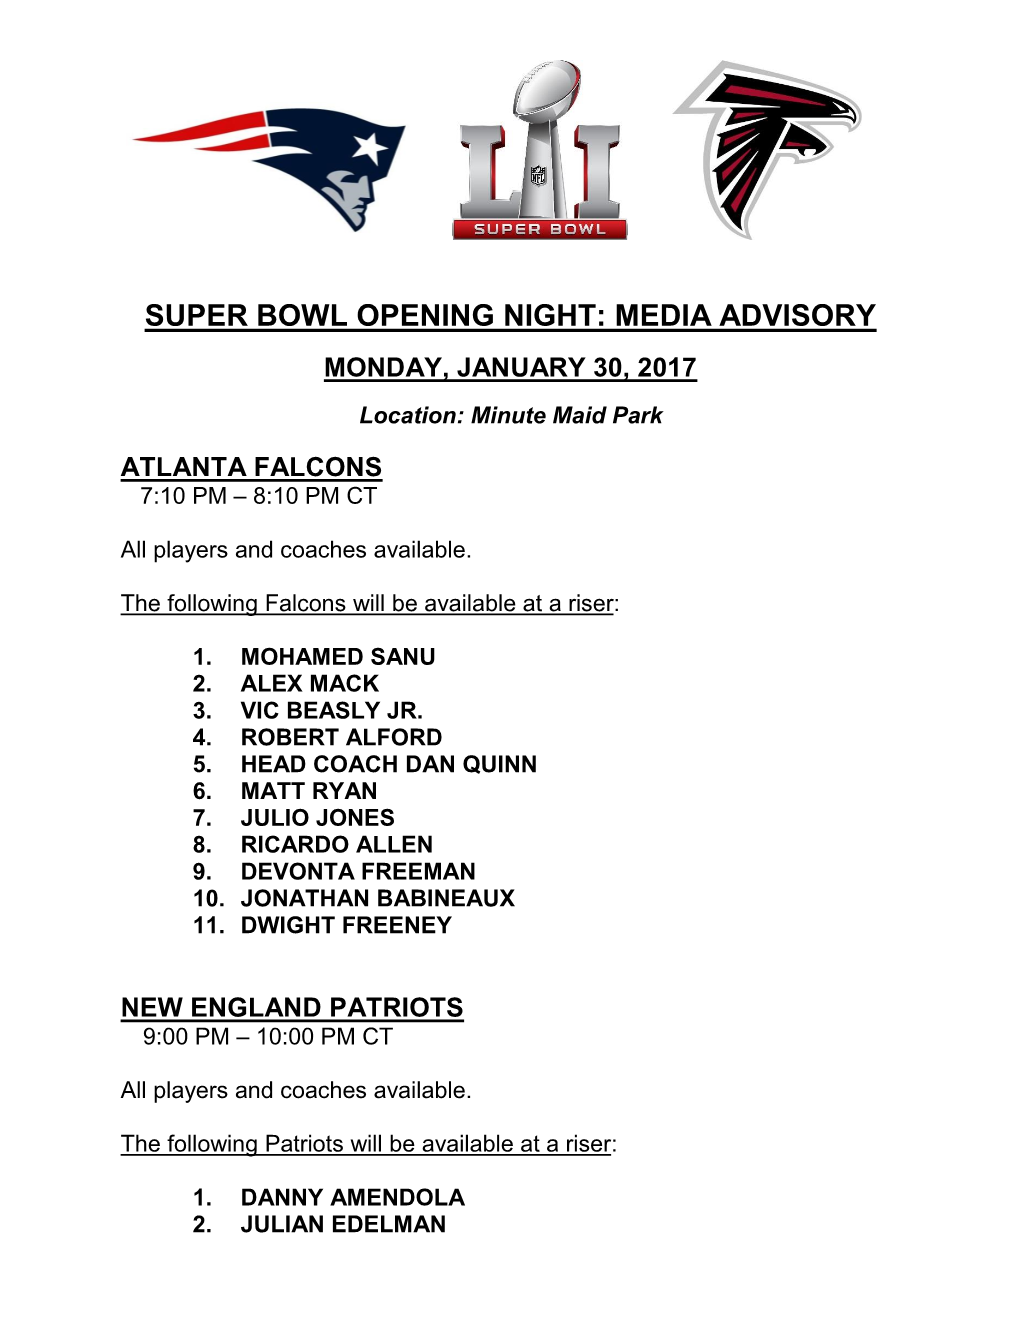 Super Bowl Opening Night: Media Advisory